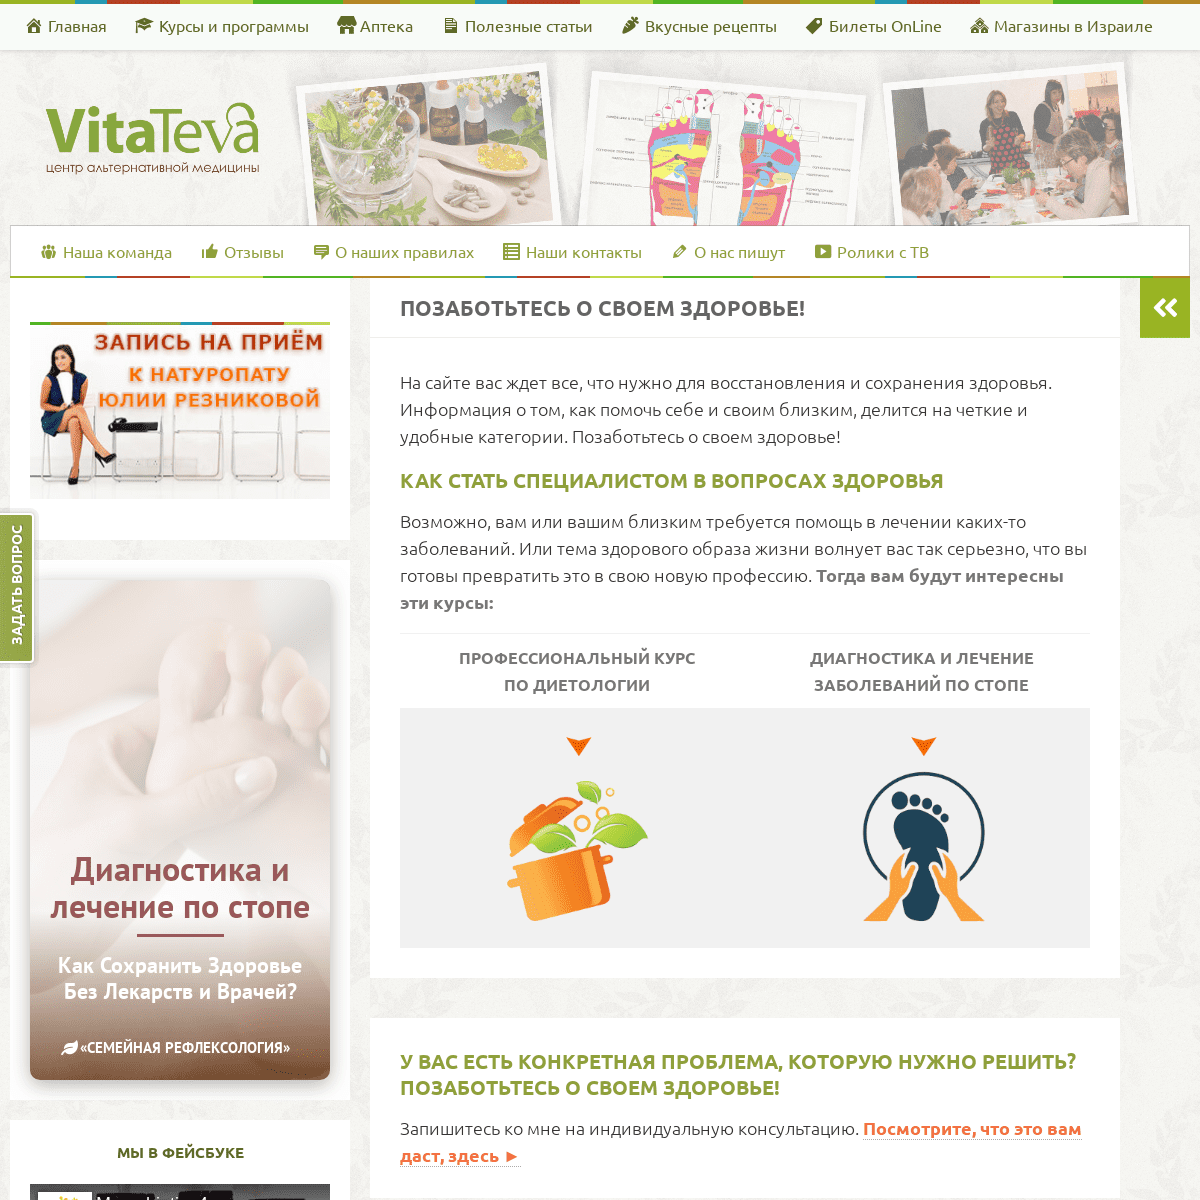 A complete backup of vitateva.com